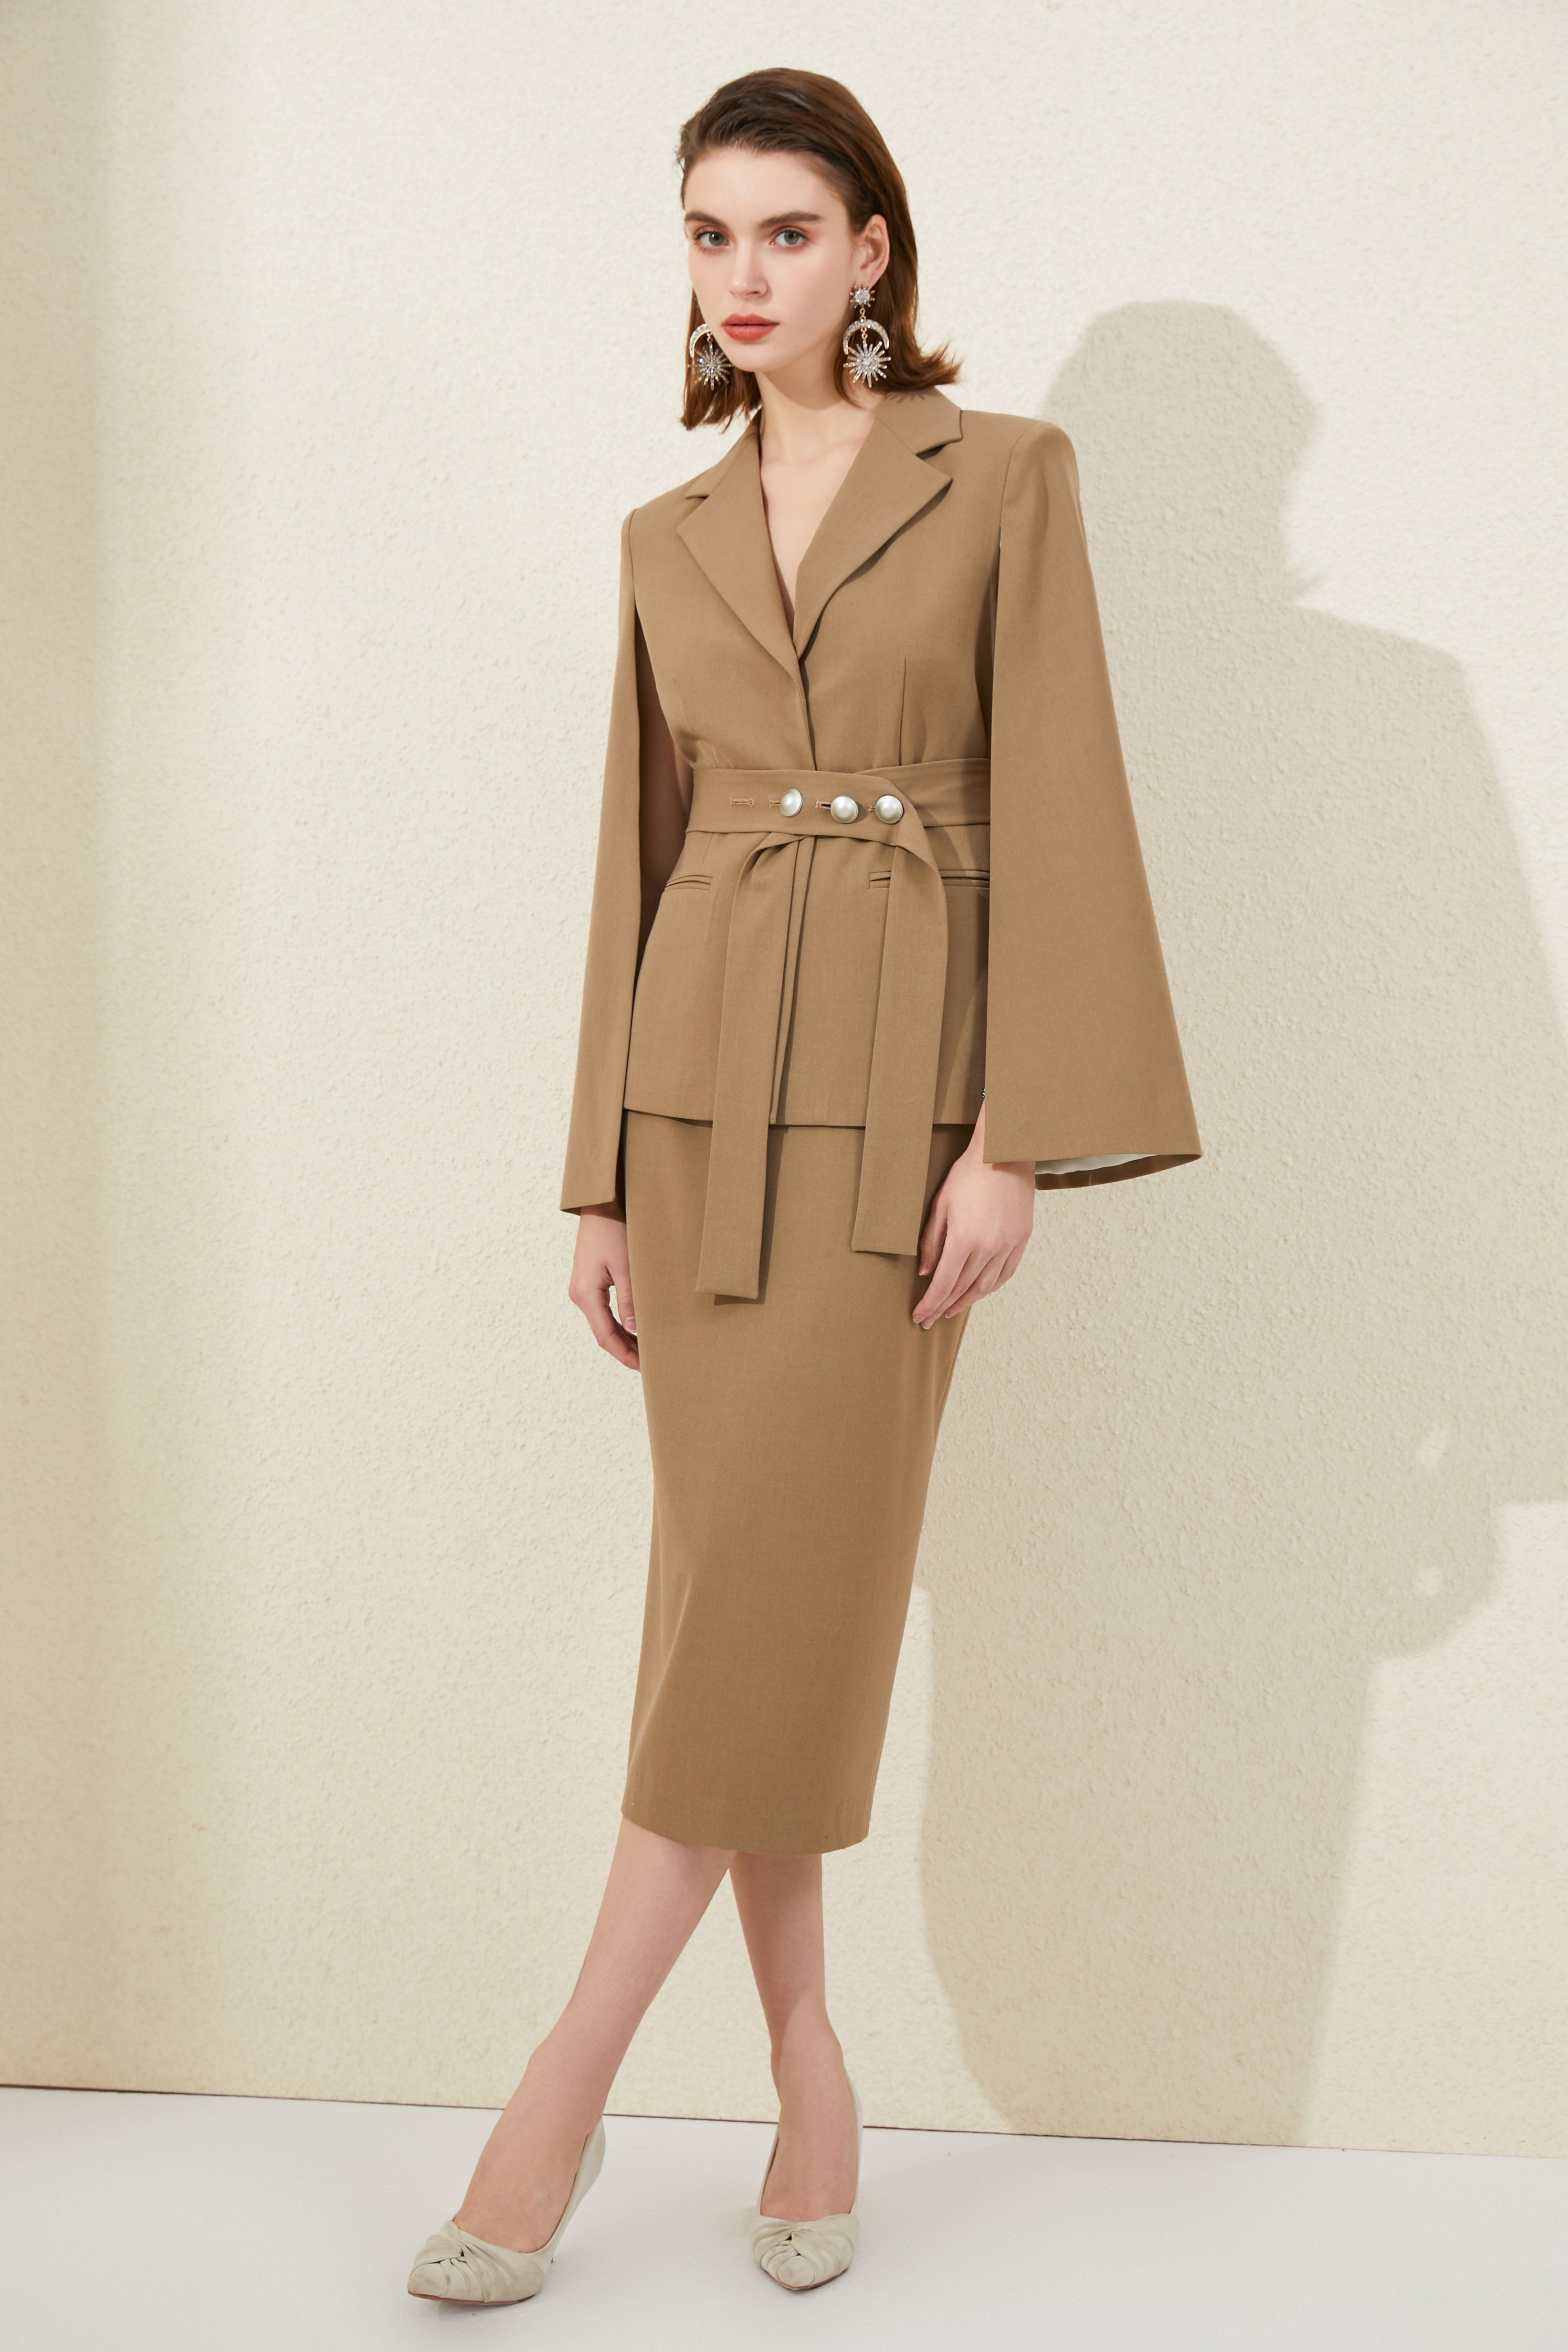 Chocolate Brown Cape Sleeve Blazer Skirt Suit - FashionByTeresa